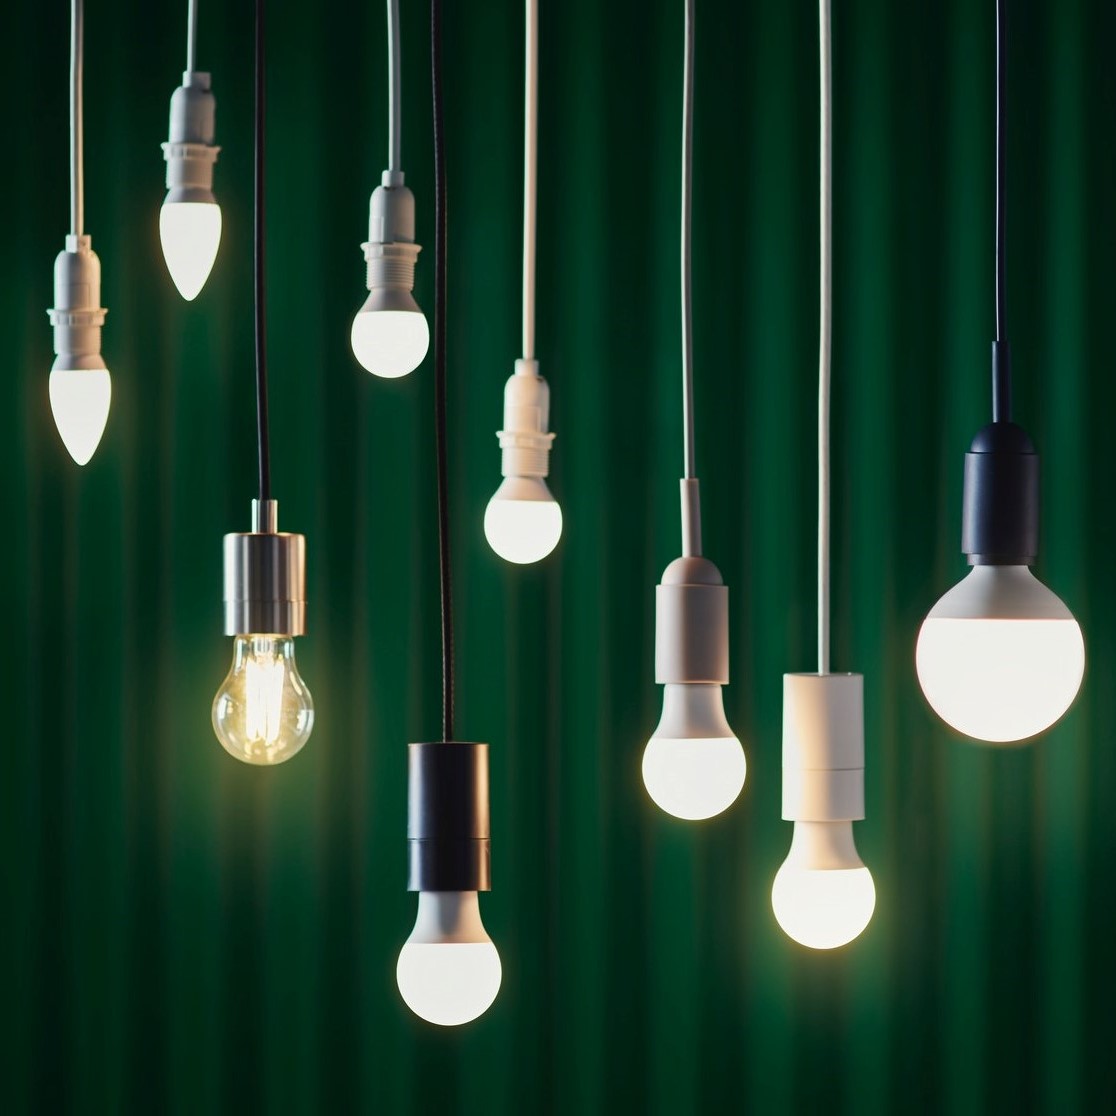 Ikea LED Lightbulbs Save Energy